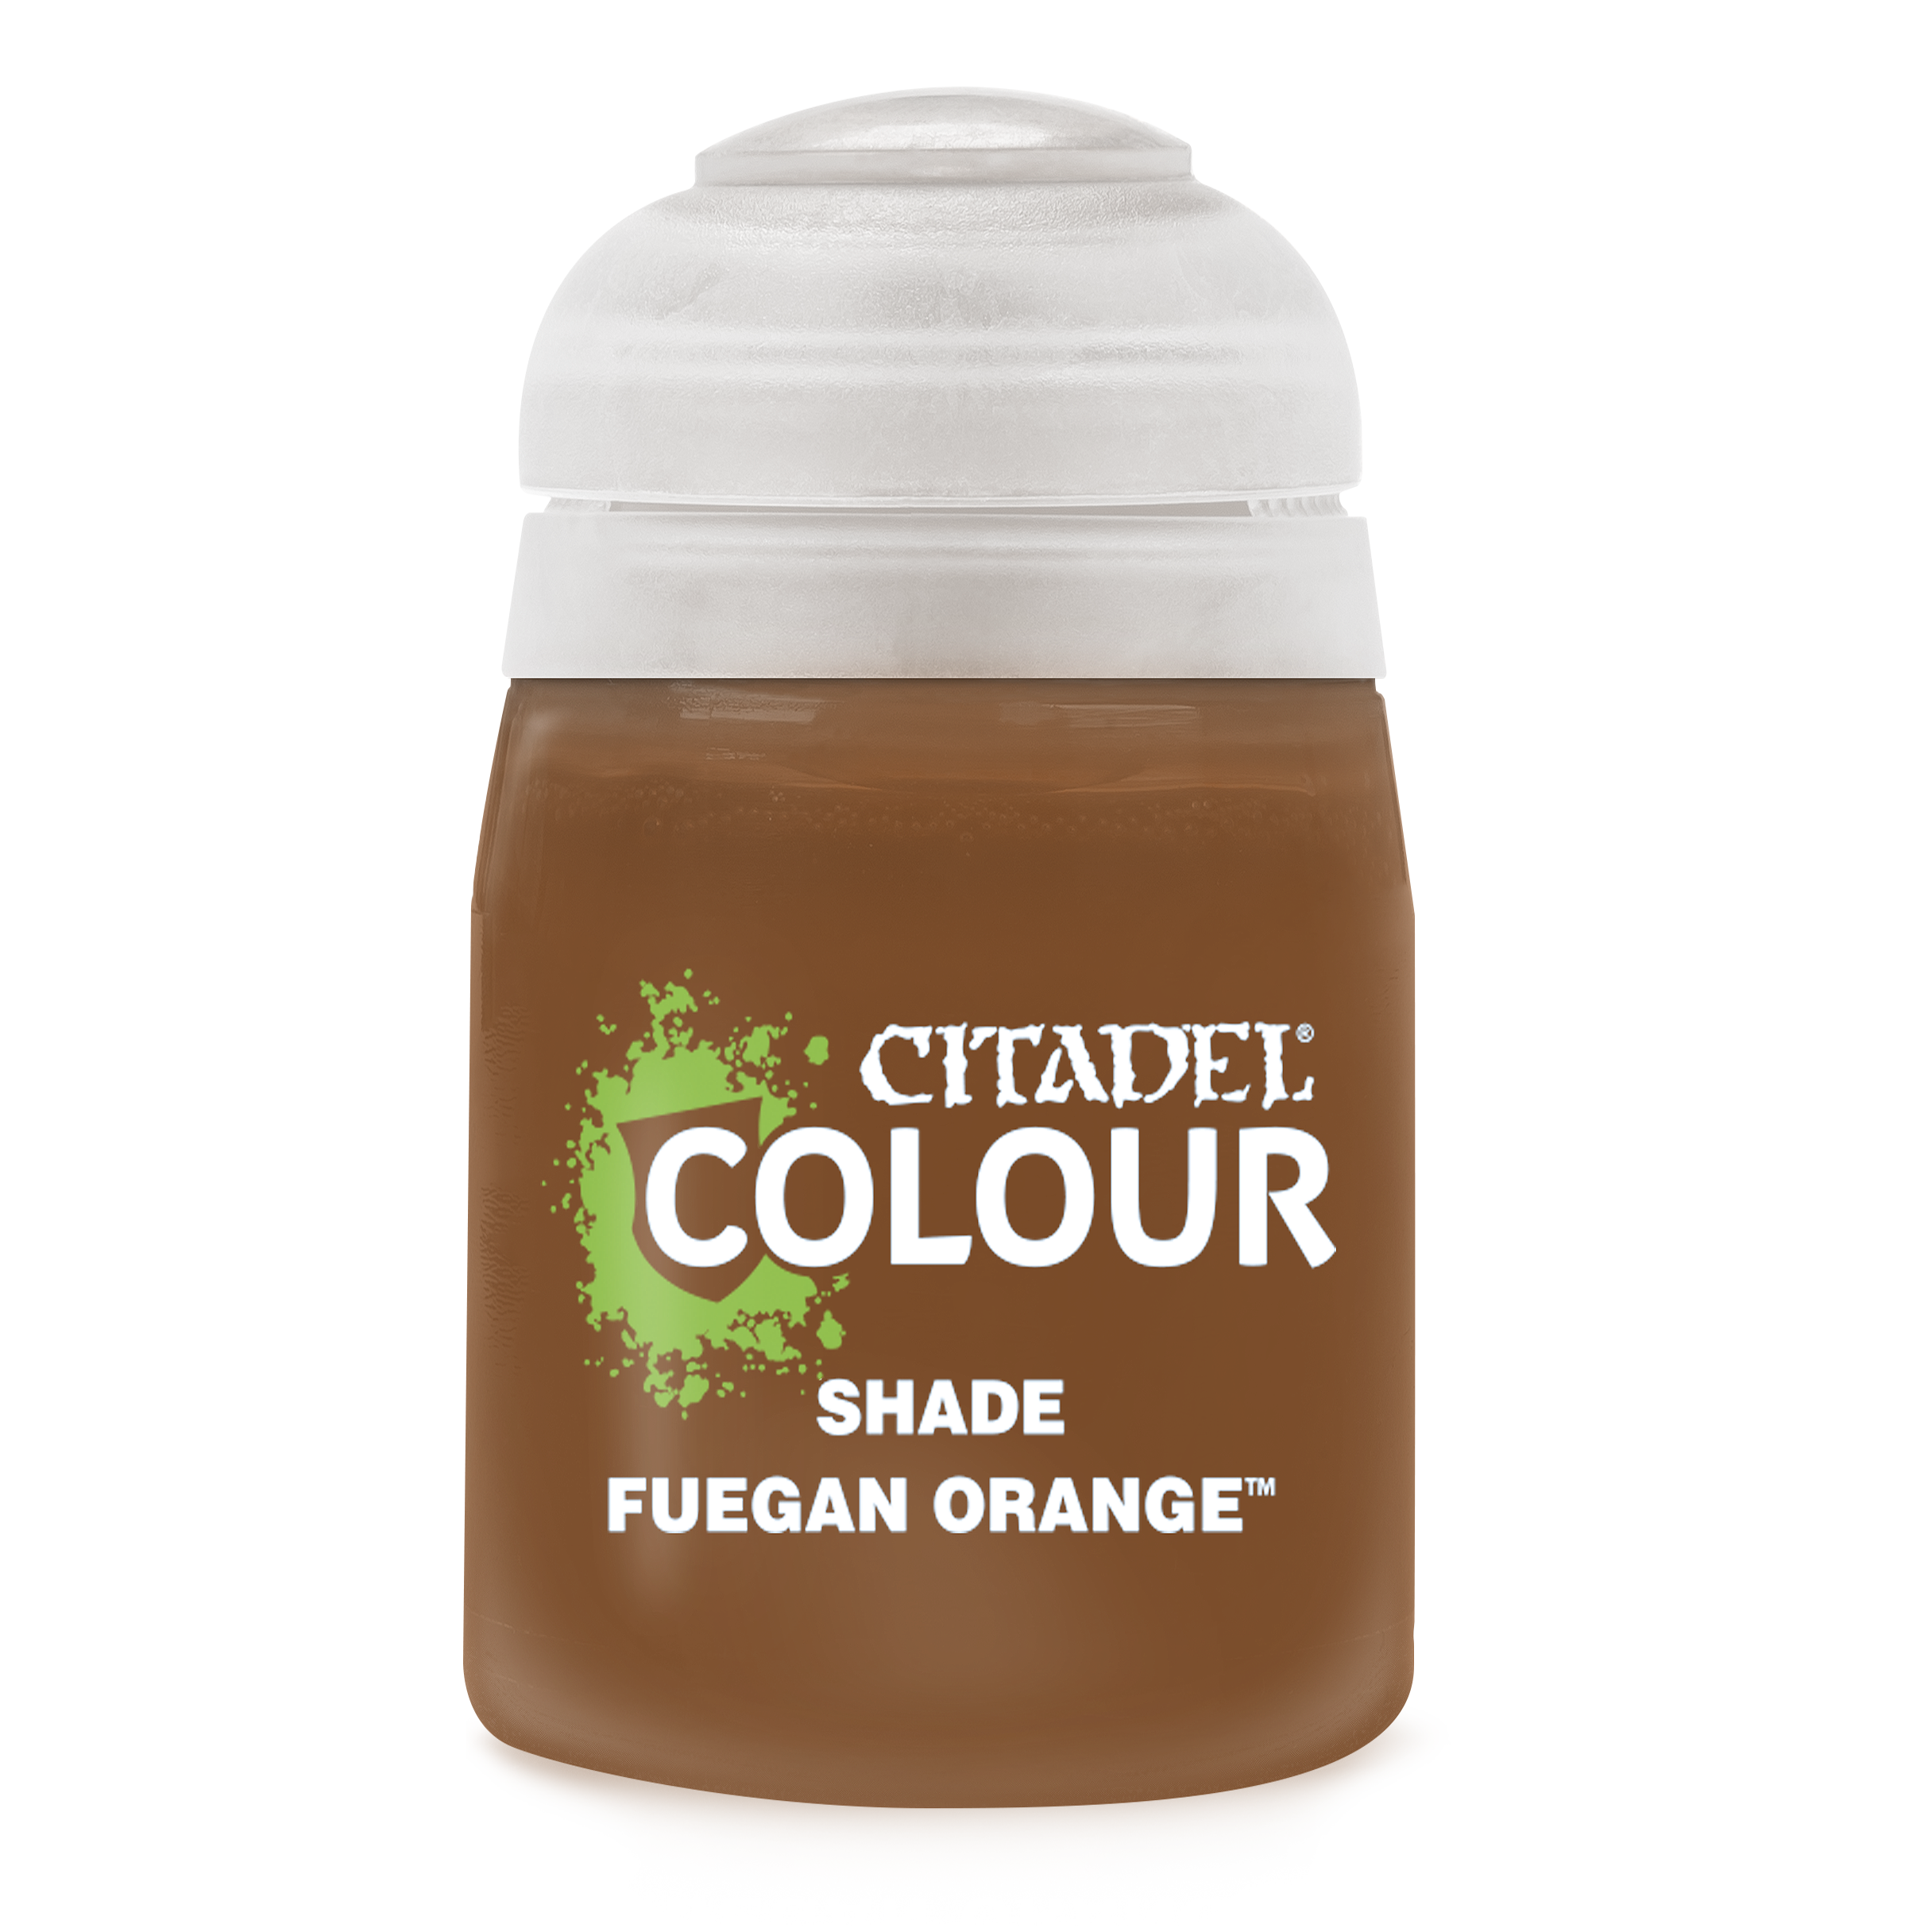 Fuegan Orange Citadel Shade Paint | Lots Moore NSW